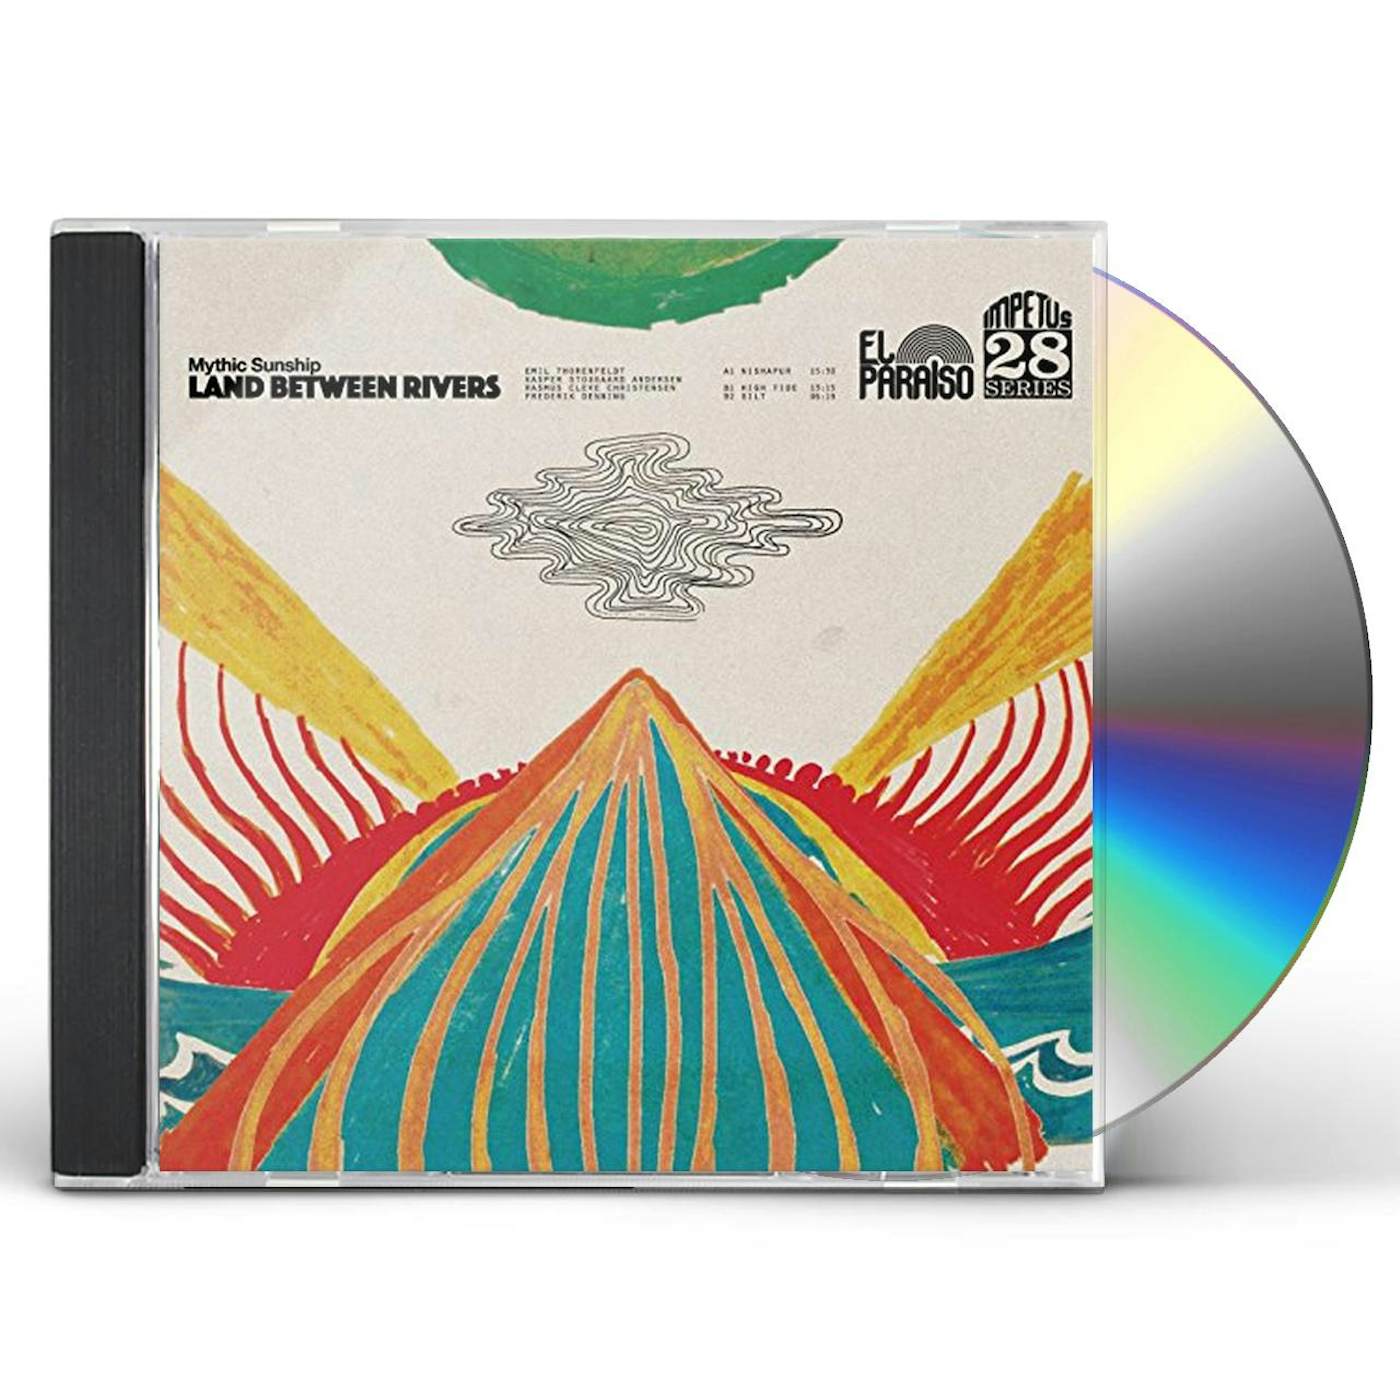 Mythic Sunship LAND BETWEEN RIVERS CD